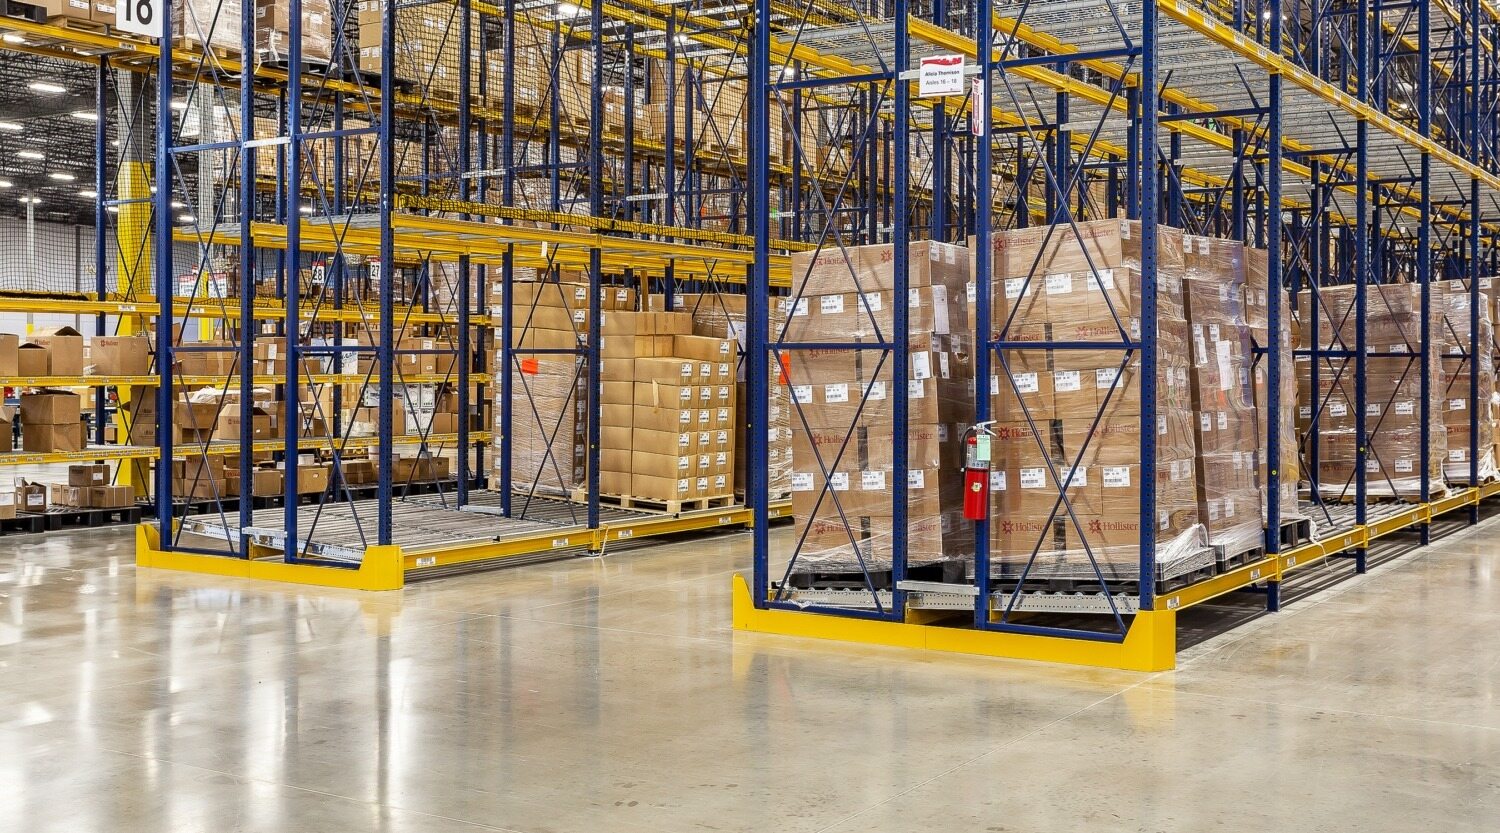 dense warehouse